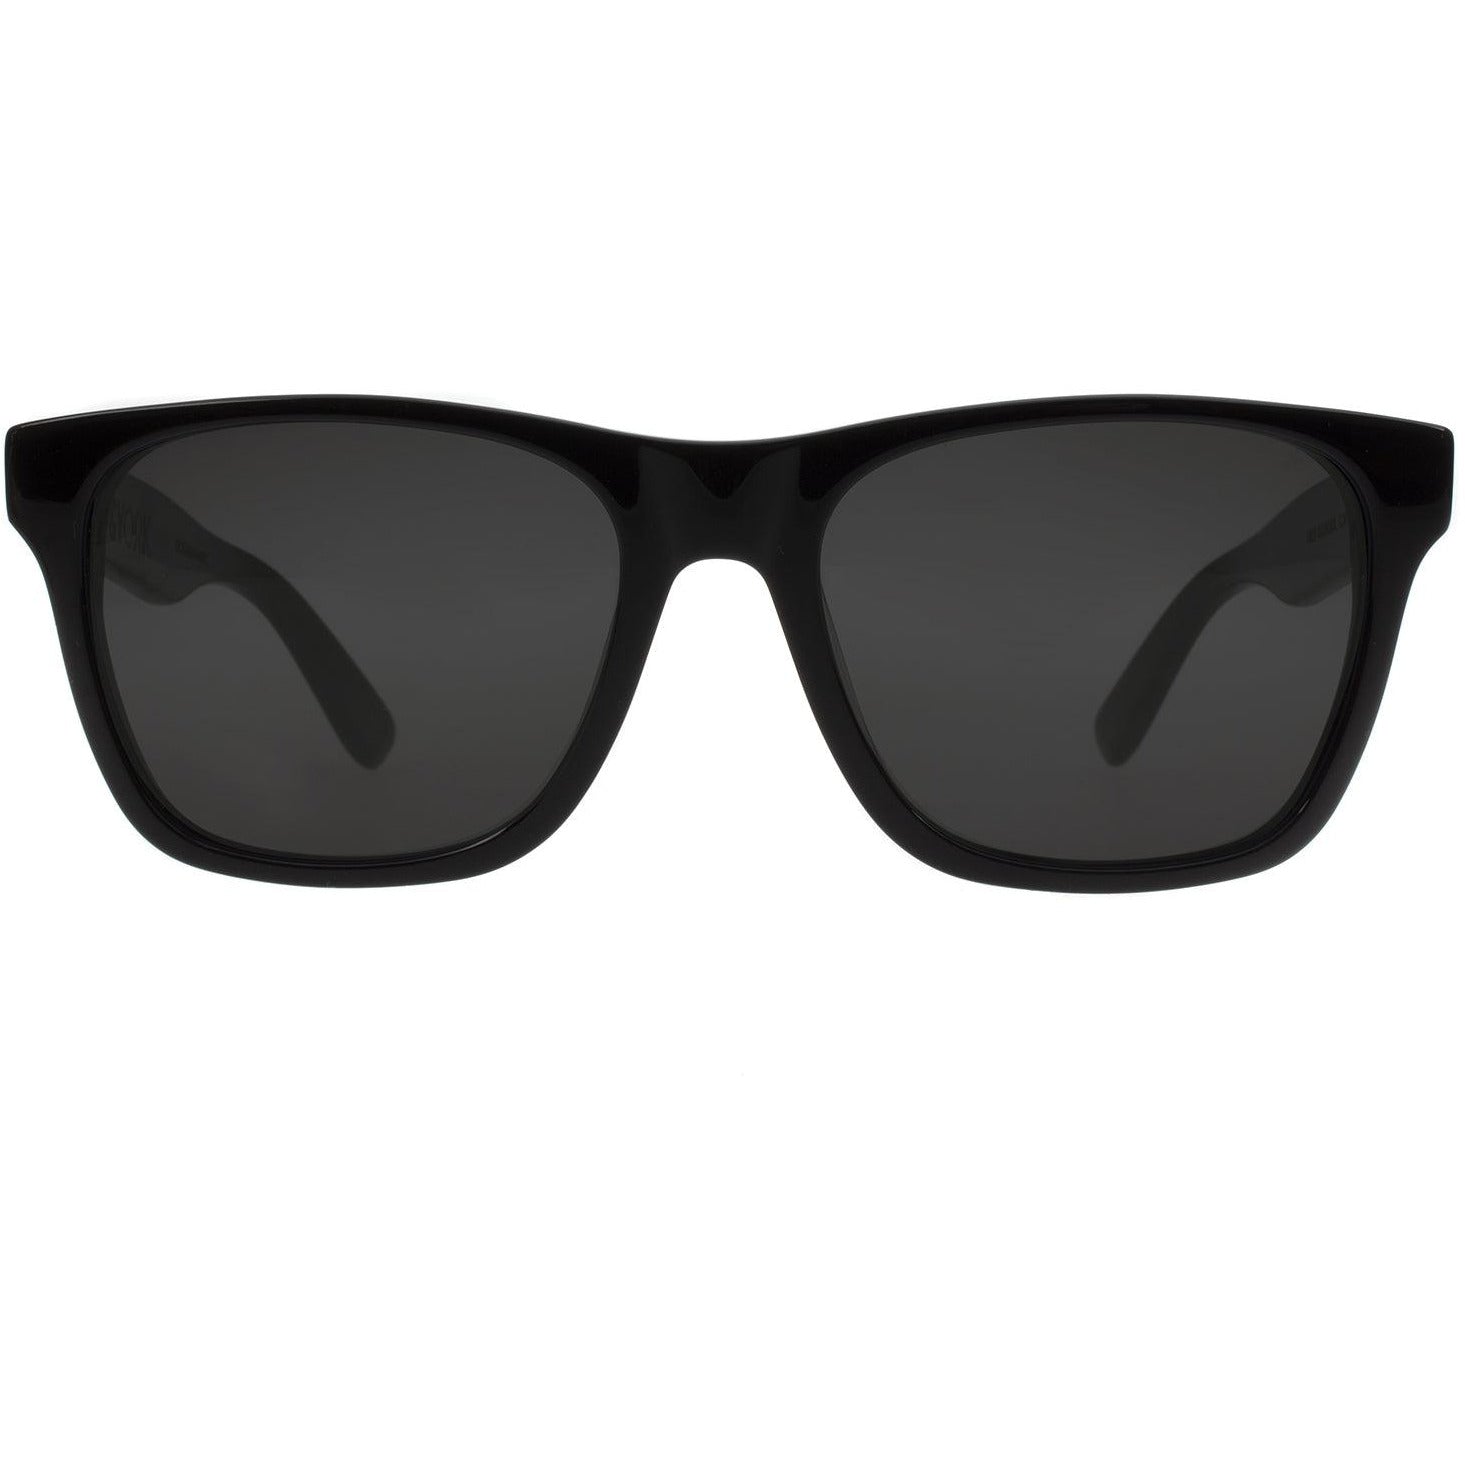 Old School Square Frame in Carbon Black for Men Sunglasses High End Designer Prescription Glasses Blue Light - Vint & York